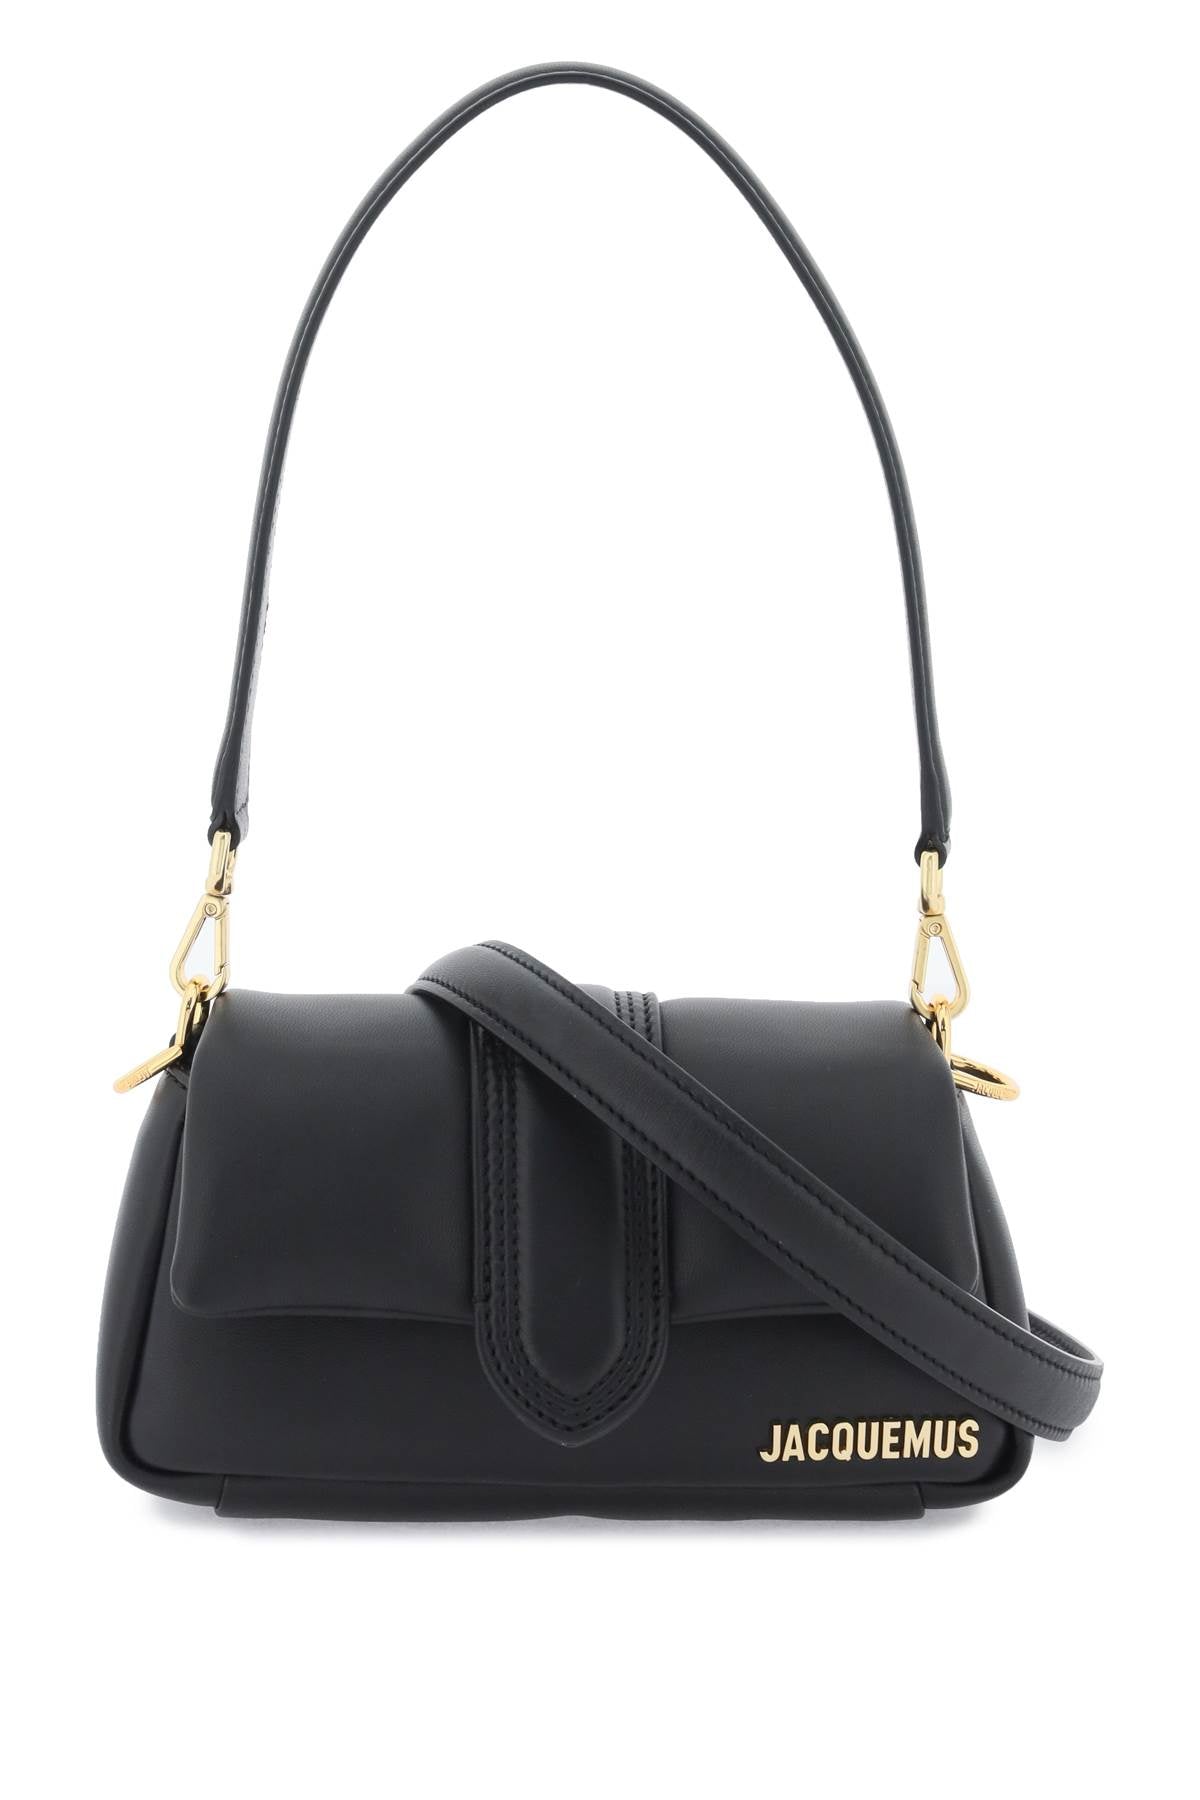 JACQUEMUS Chic and Versatile Black Shoulder Handbag for Women - SS24 Collection